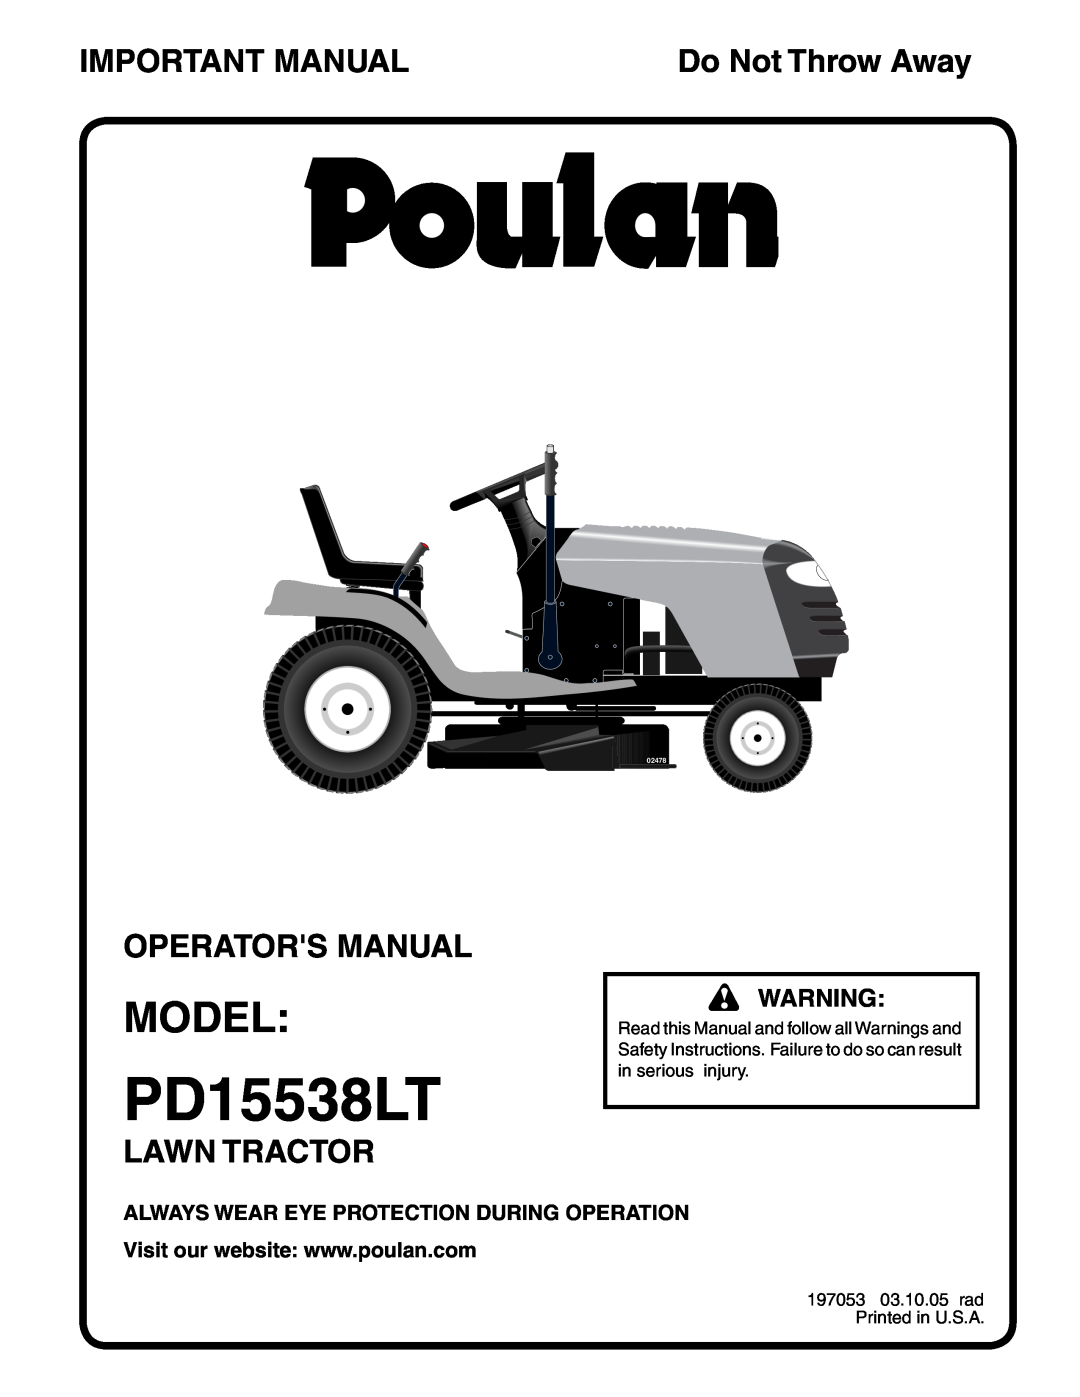 Poulan PD15538LT manual Model, Important Manual, Operators Manual, Lawn Tractor, Do Not Throw Away, 02478 